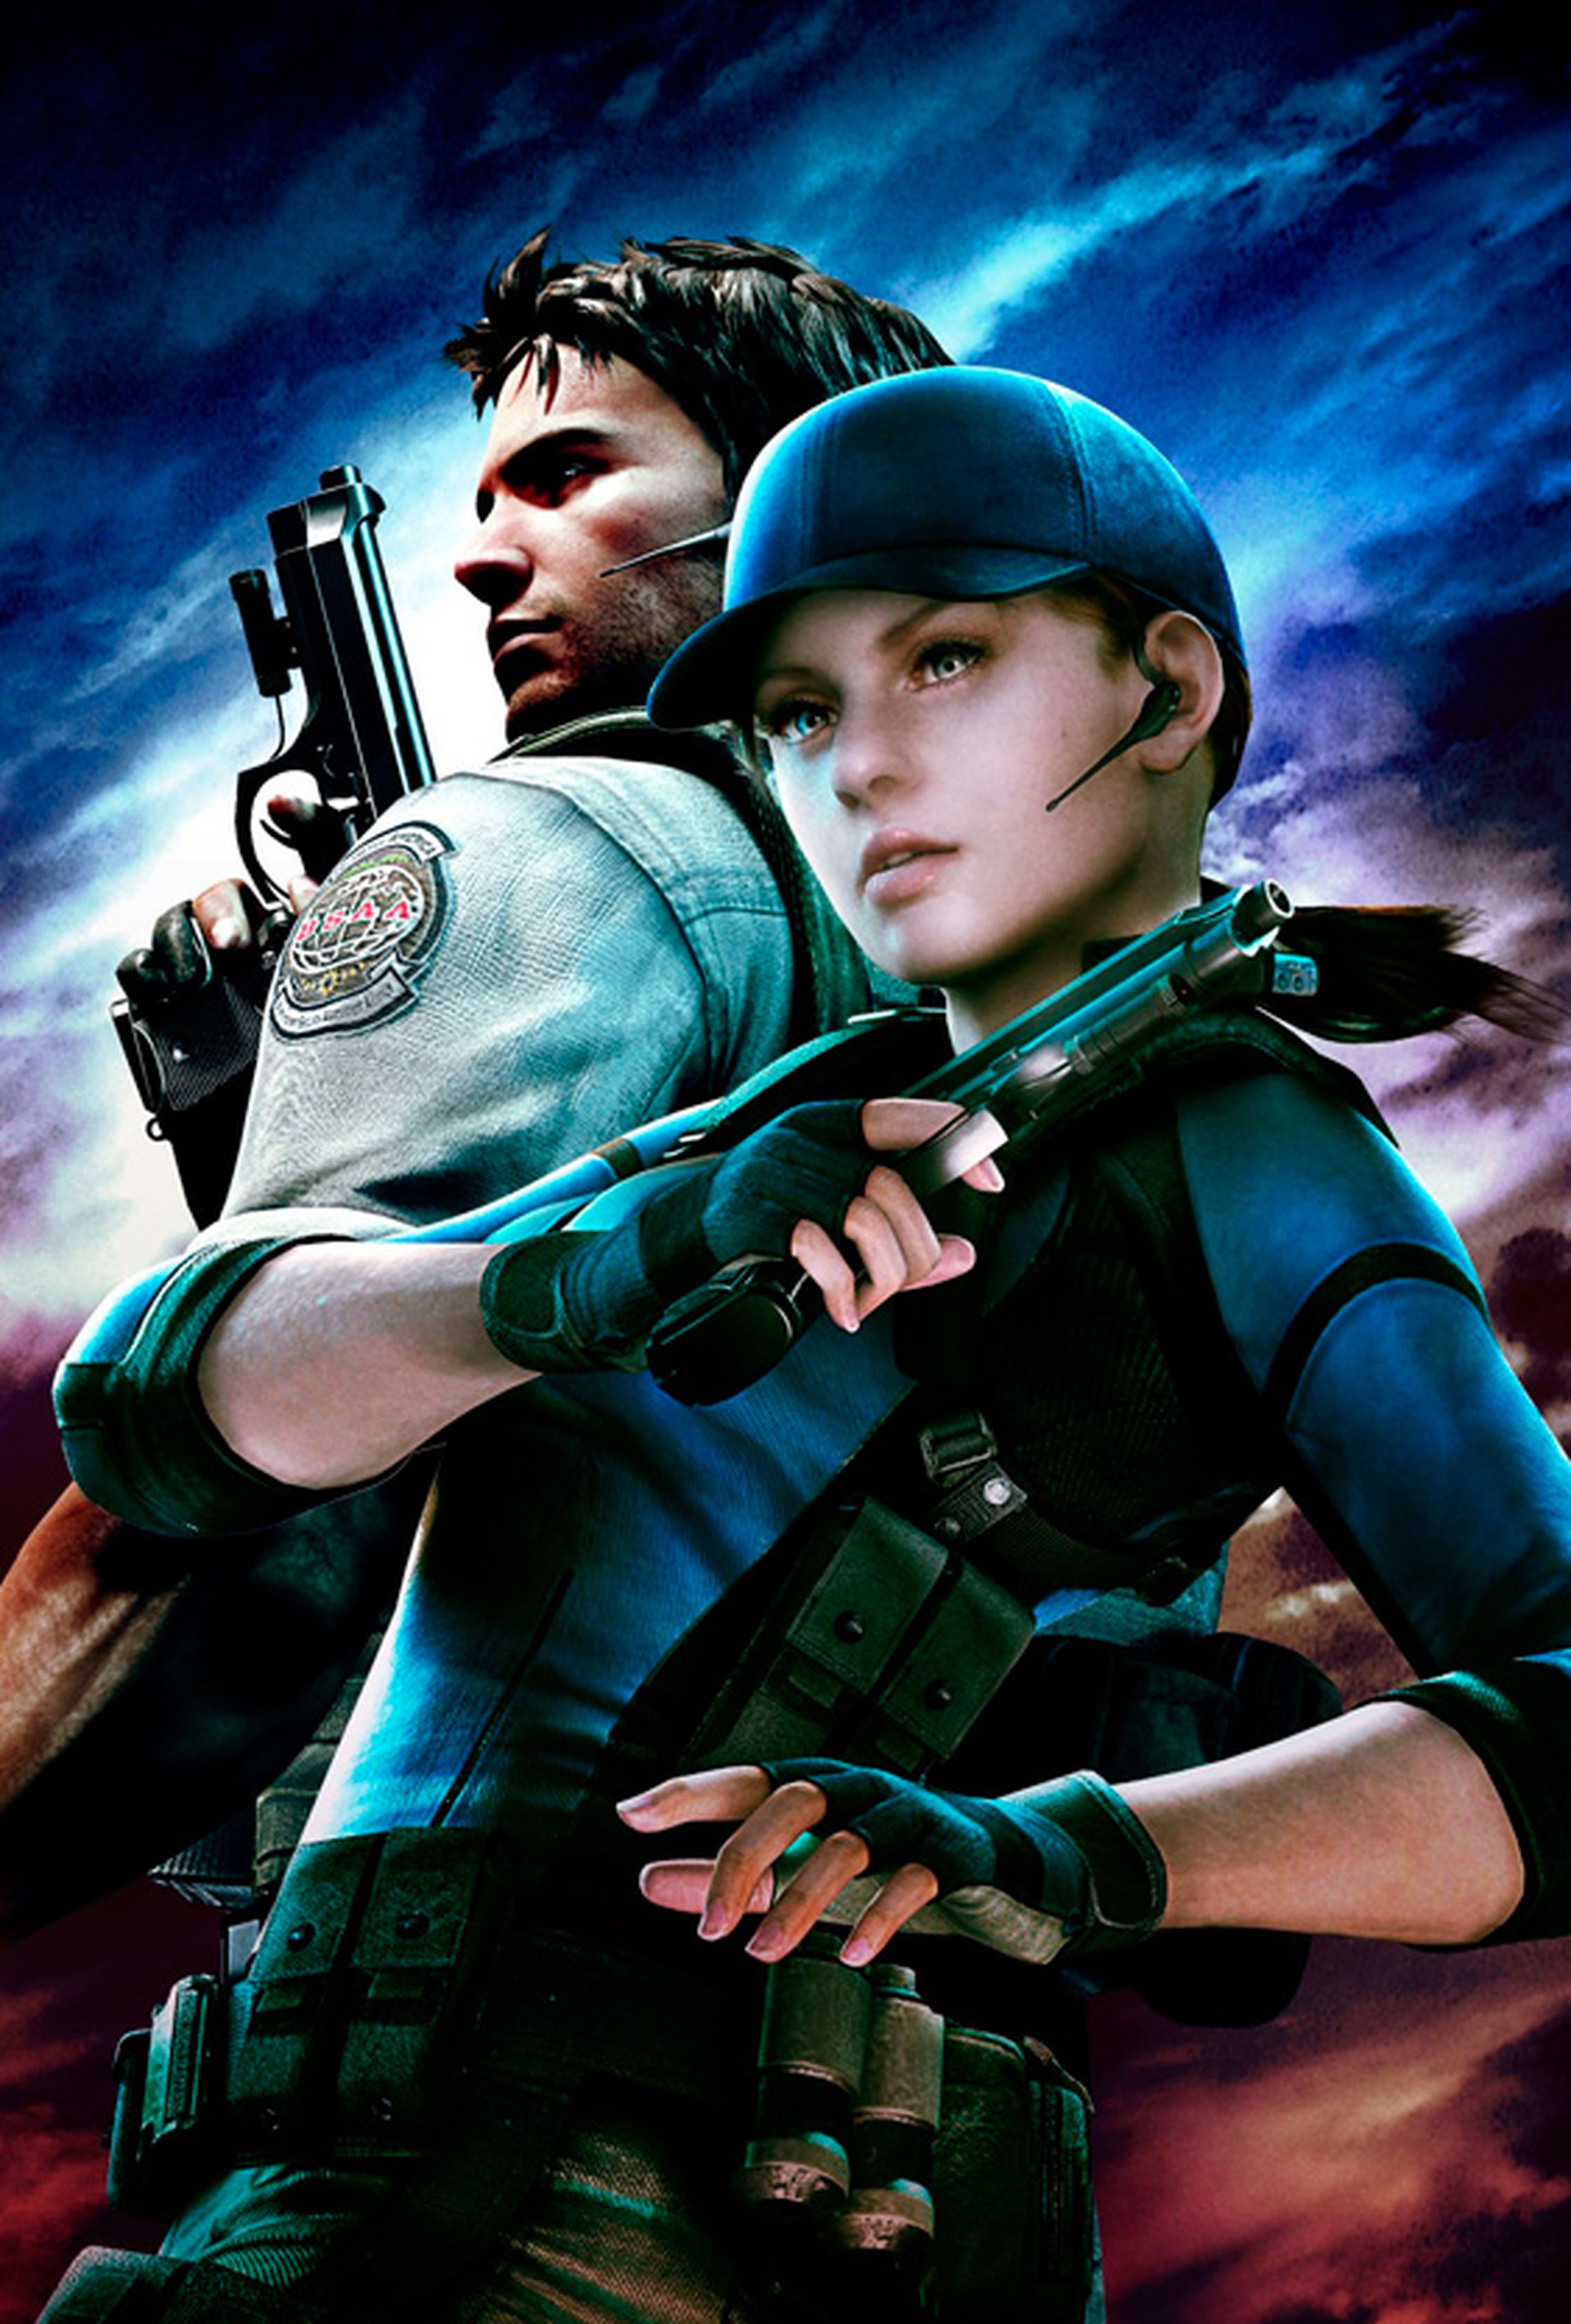 Resident Evil 5 - Carátula